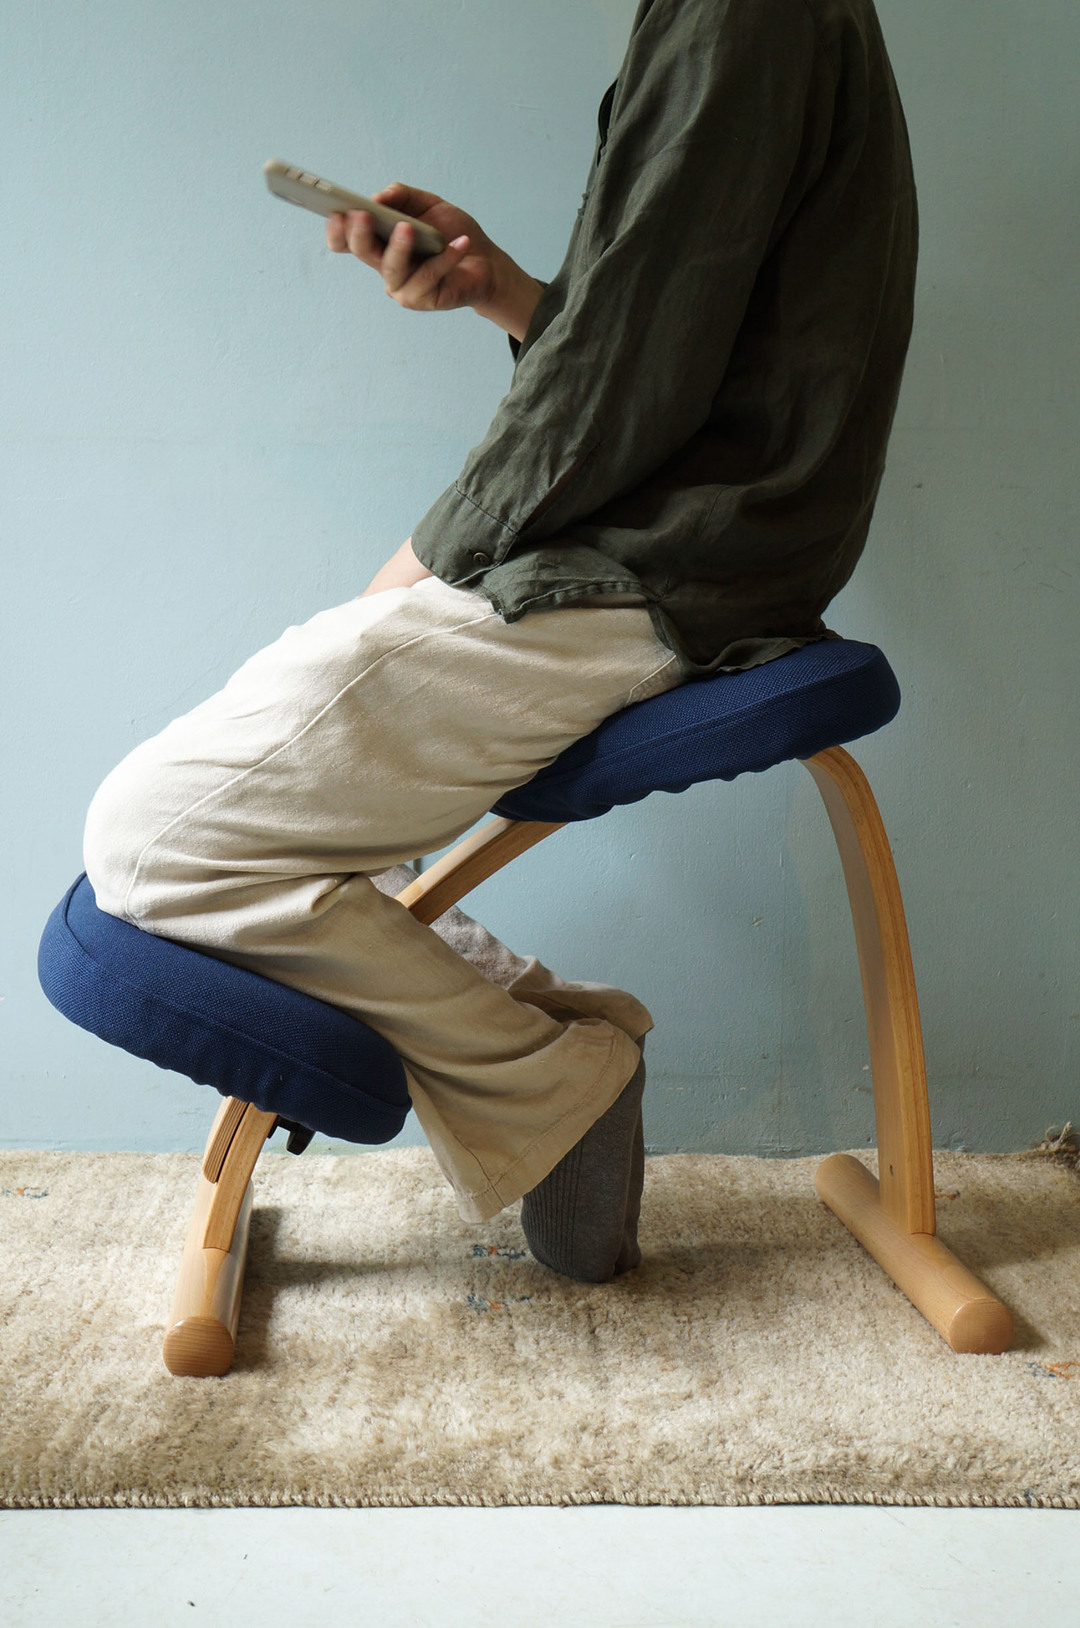 Rybo Balance Easy Chair Norway/リボ バランスチェア イージー ネイビー ノルウェー デザイン 椅子 北欧家具